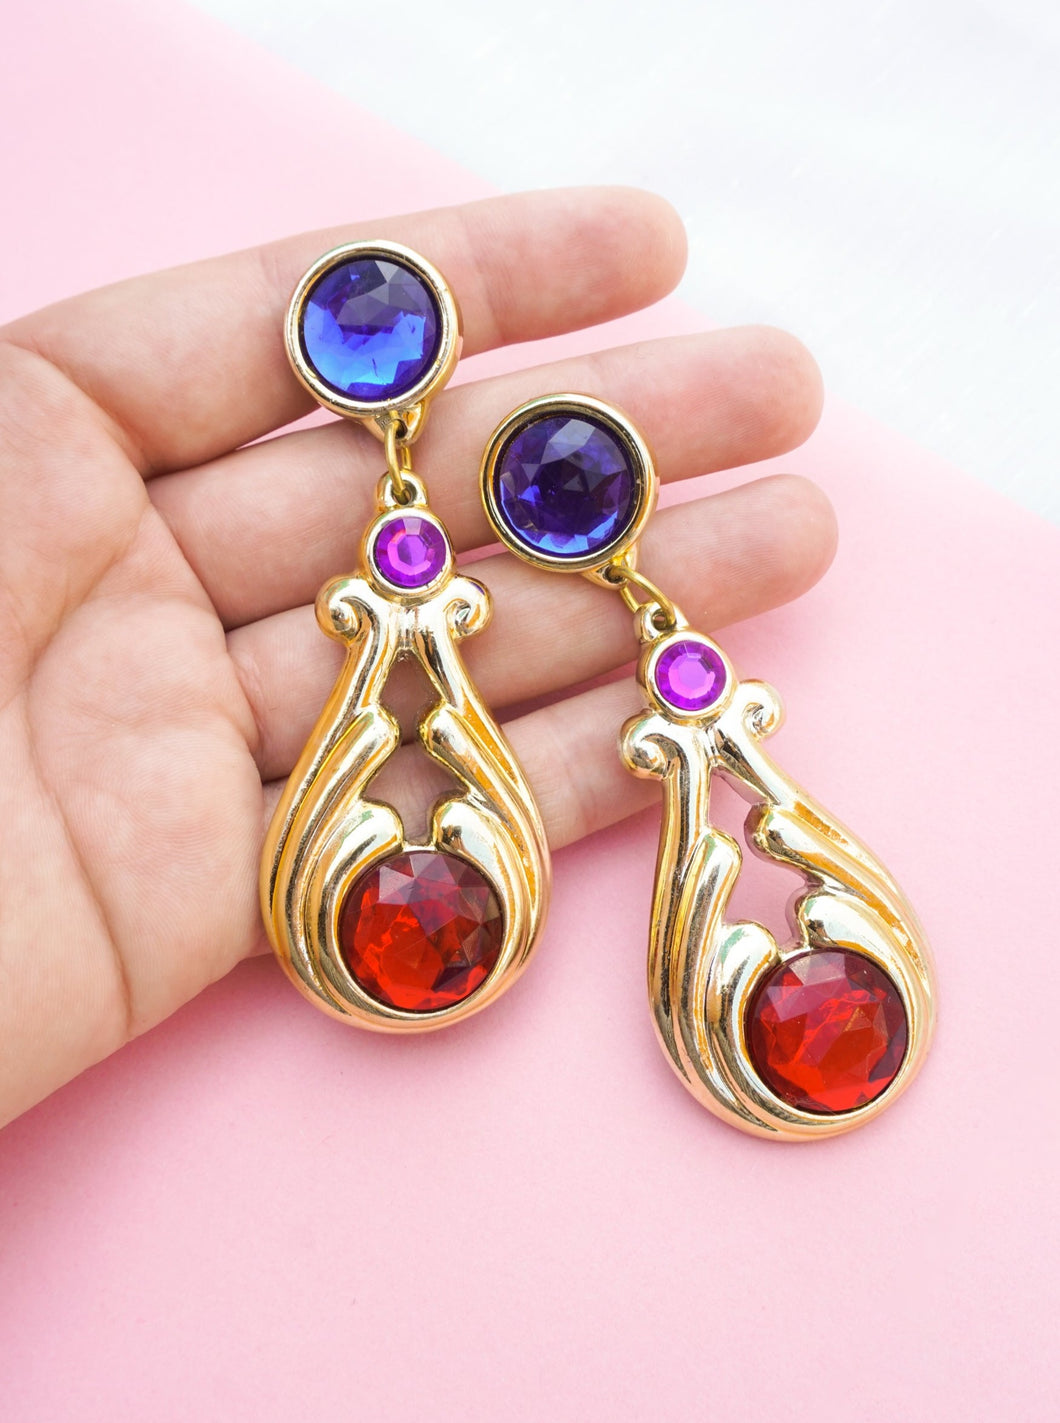 Multicolored rhinestone earrings